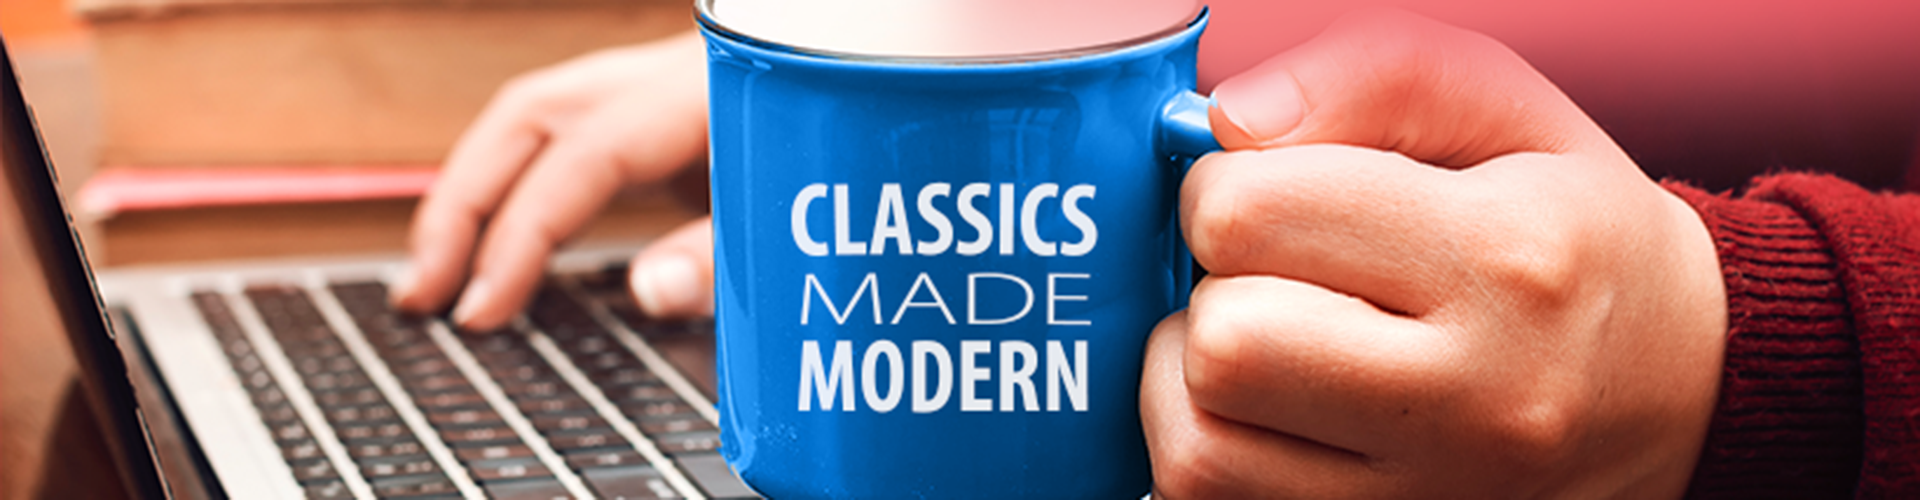 Classics made modern